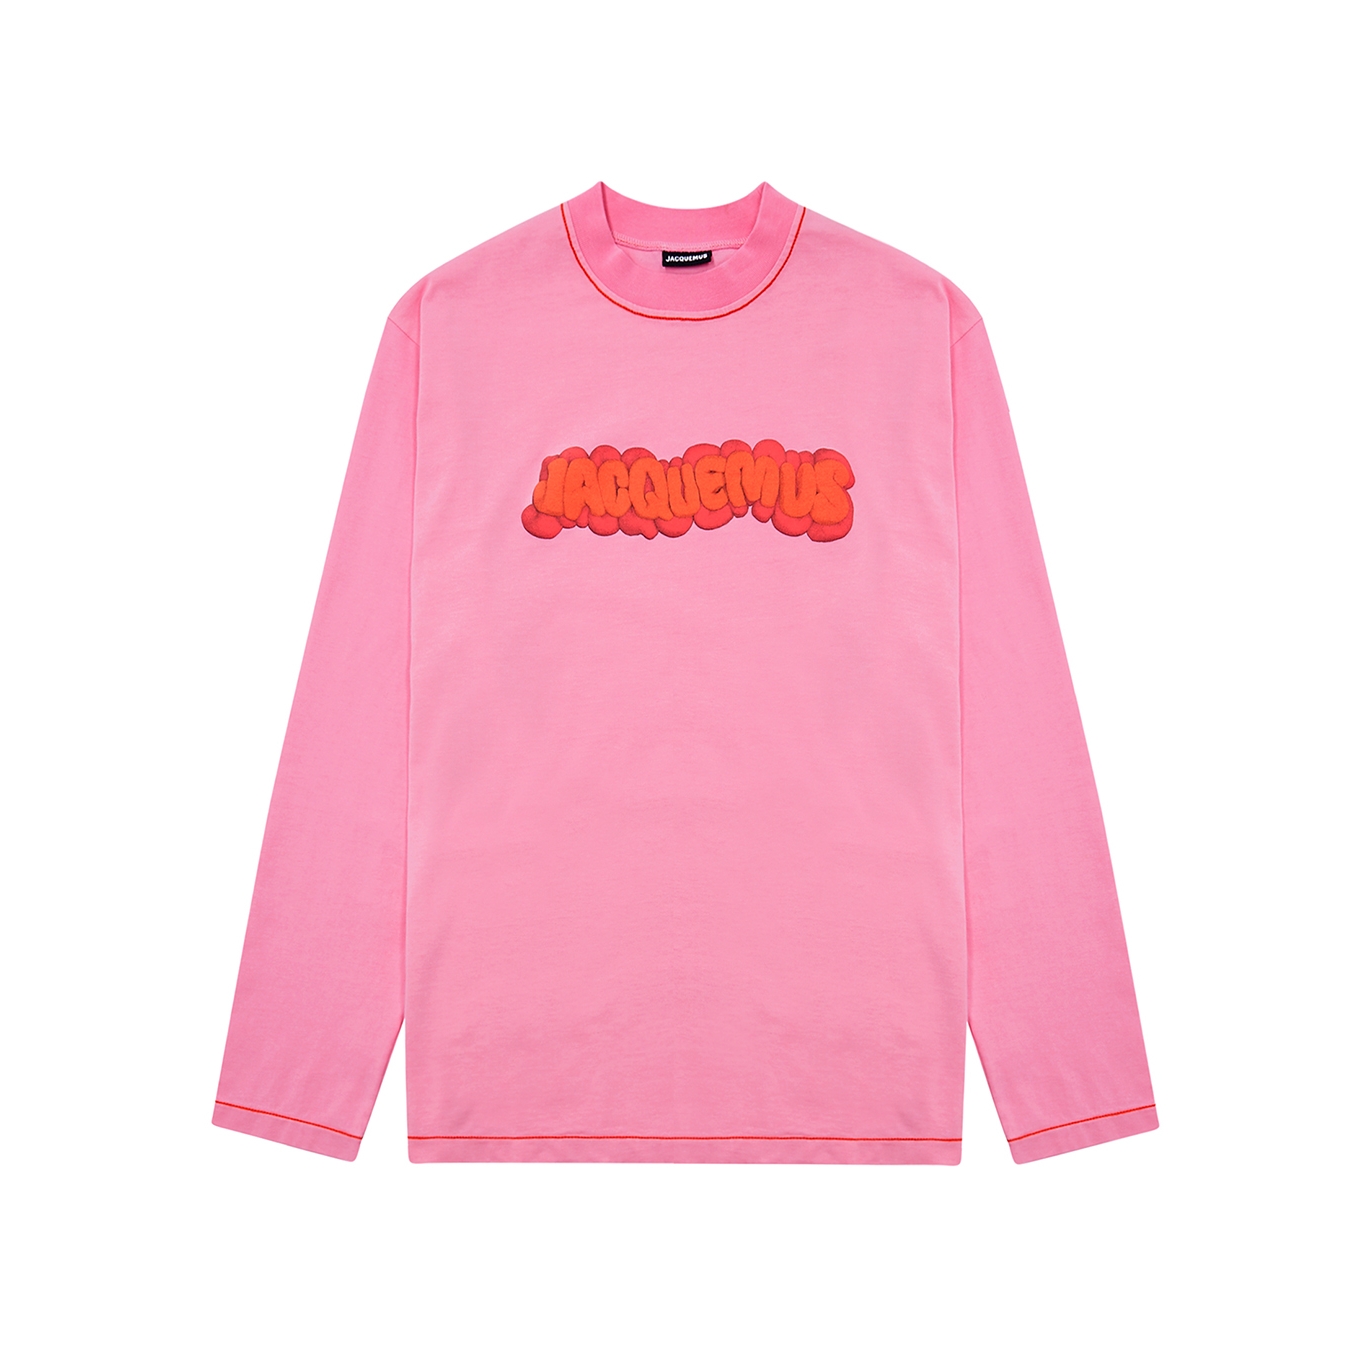 Jacquemus Le T-shirt Pink Printed Cotton Top - XL